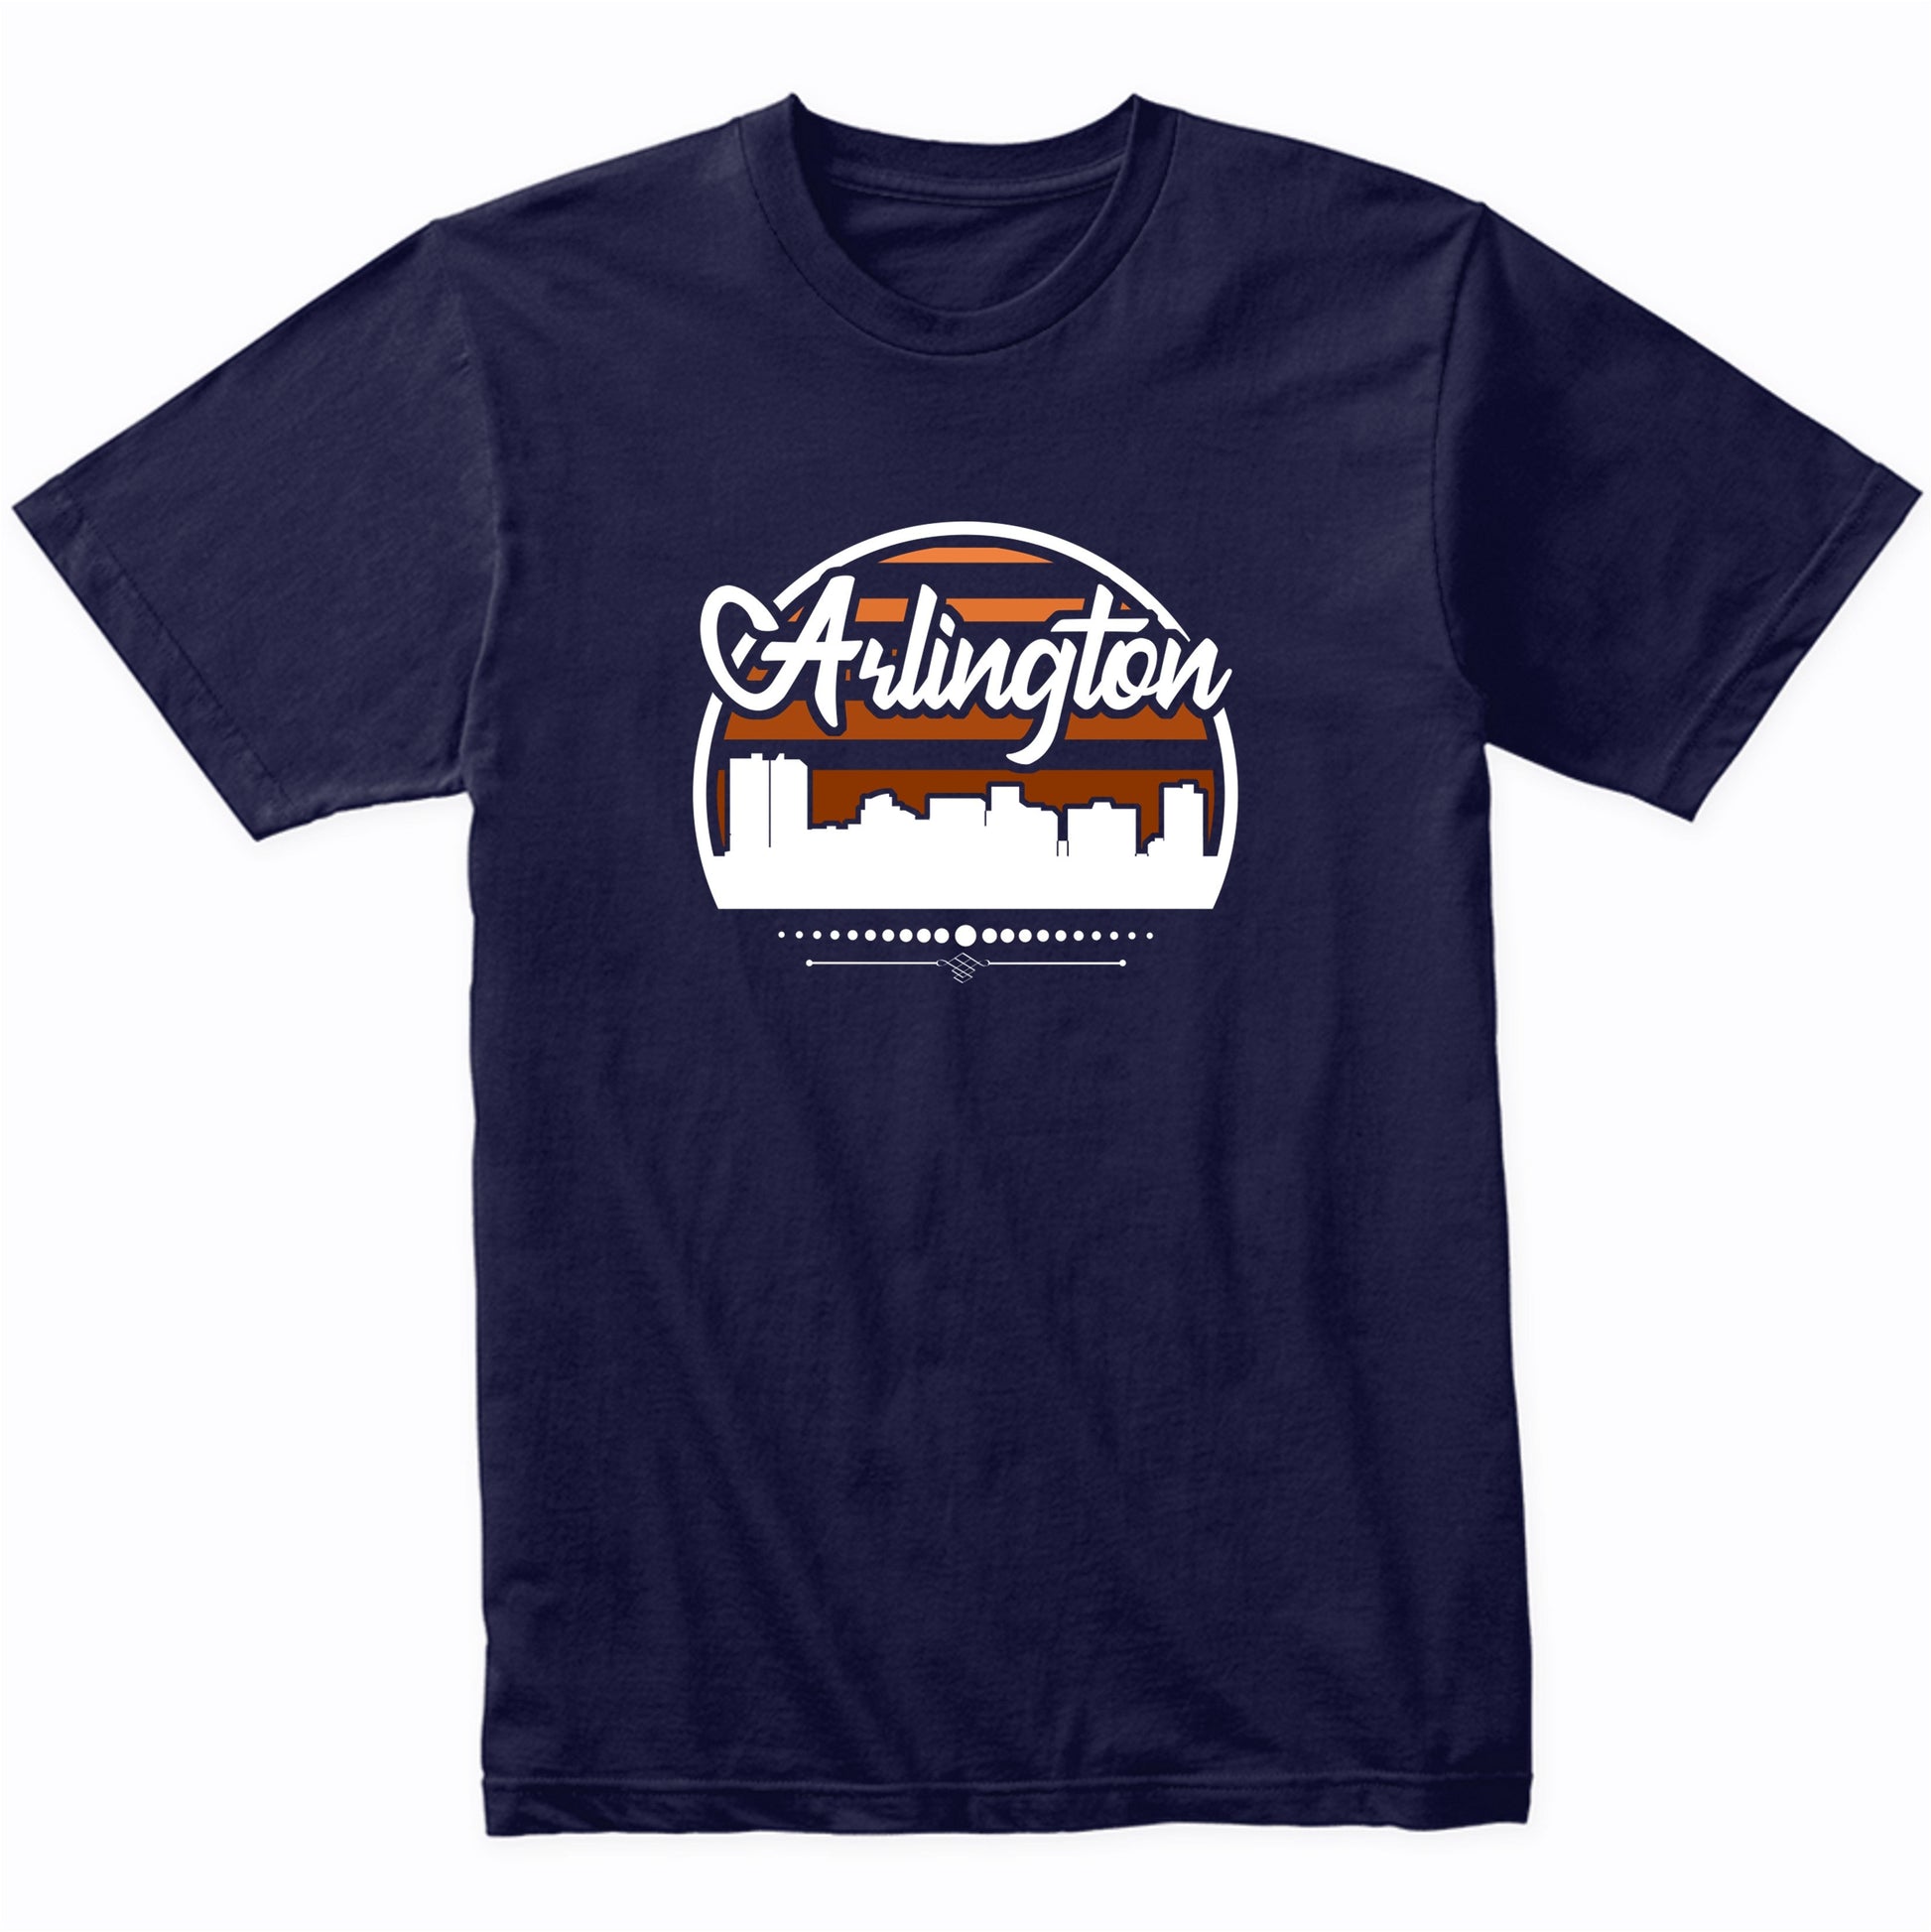 Retro Arlington Texas Sunset Skyline T-Shirt